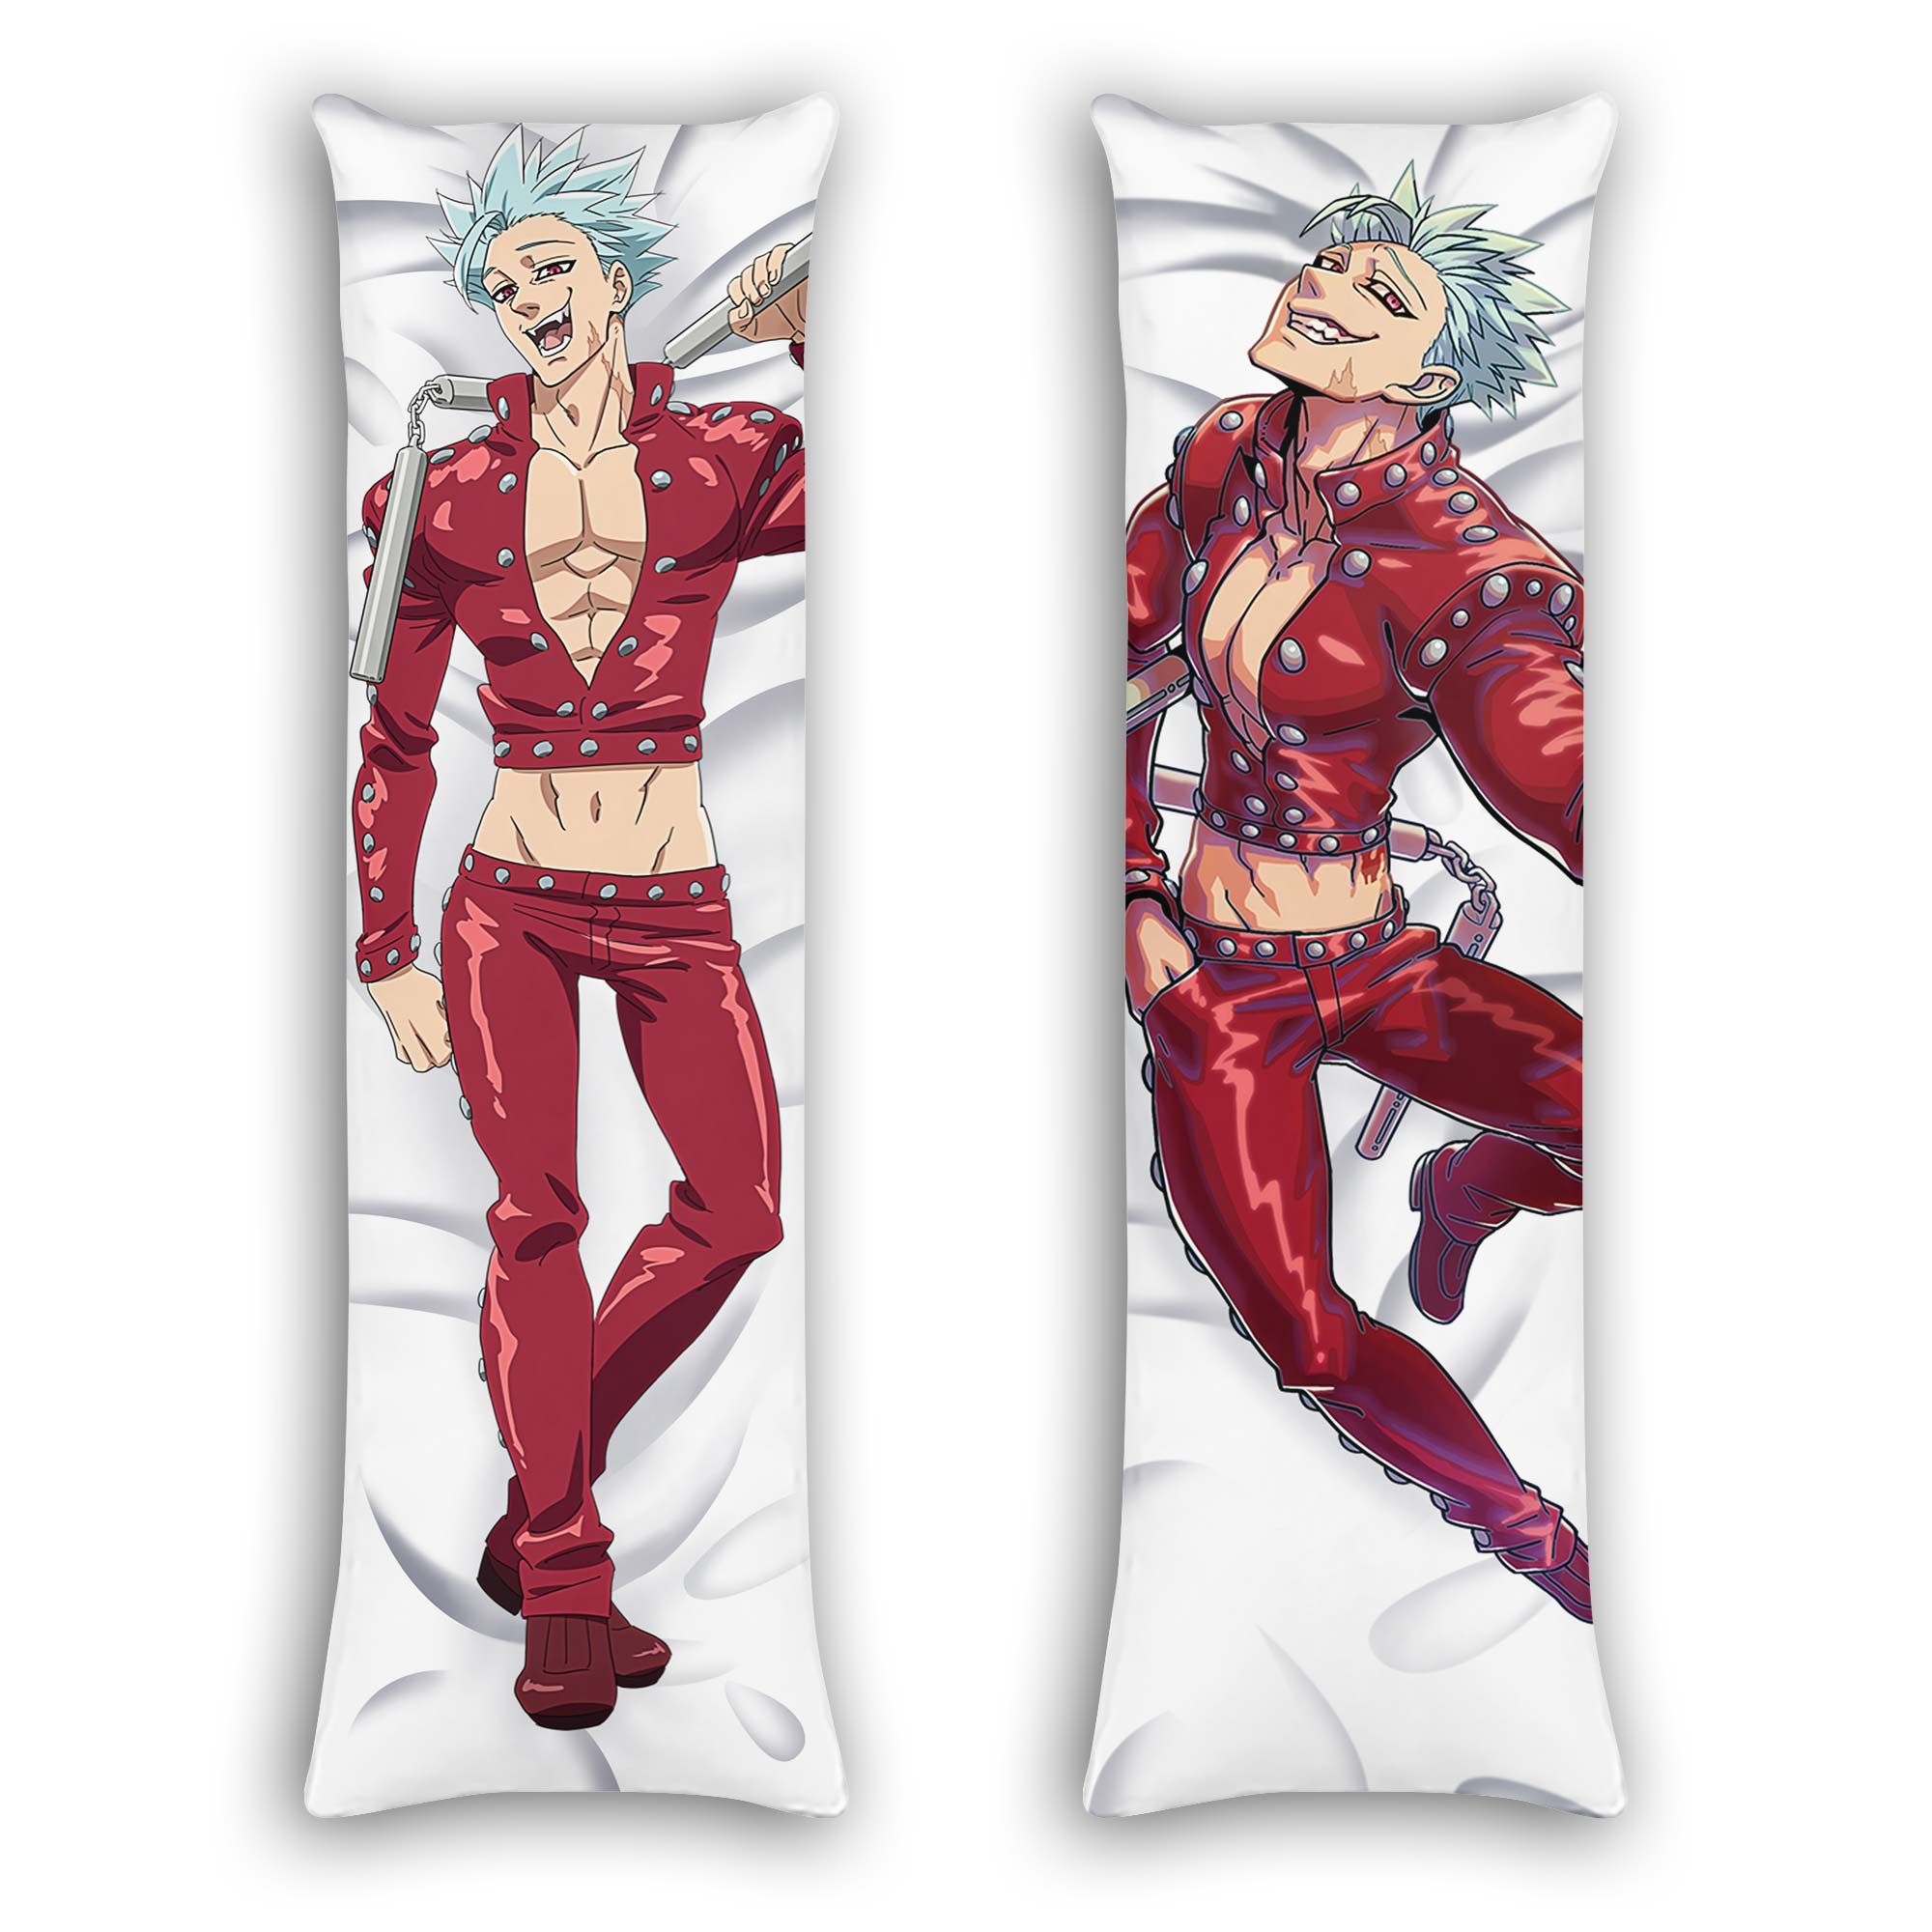 Ban Body Pillow Cover Custom The Seven Deadly Sins Anime Gifts Official Merch GO0110